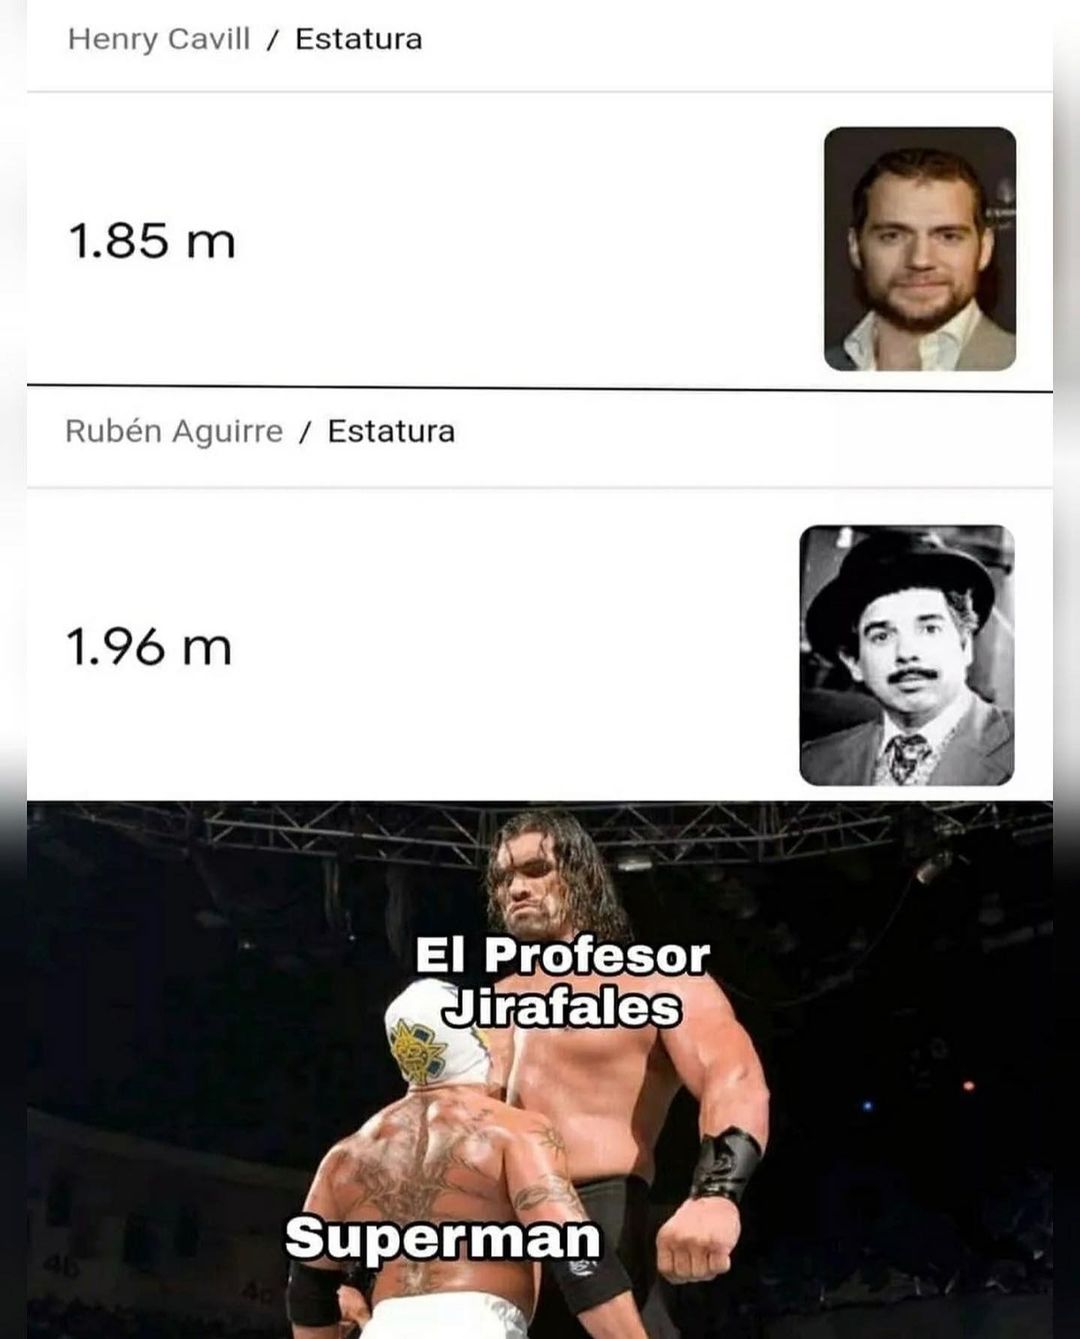 Henry Cavill / Estatura 1.85 m.  Rubén Aguirre / Estatura 1.96 m. El Profesor Jirafales. Superman.